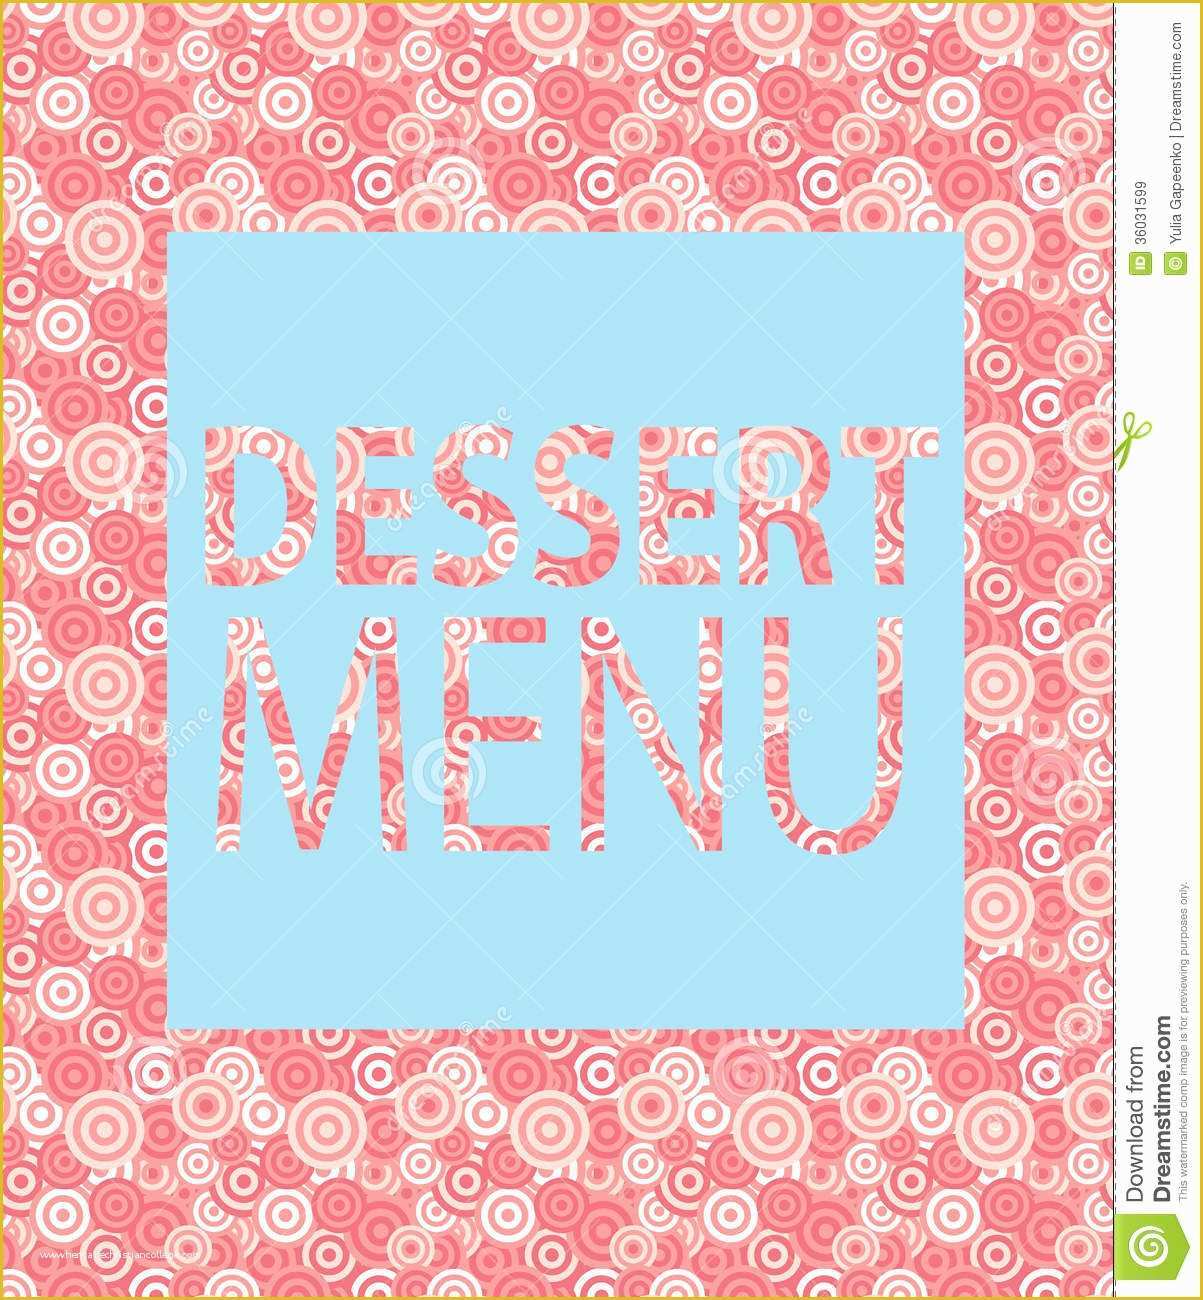 Dessert Menu Template Free Download Of Dessert Menu Template Vector Illustration Stock Image